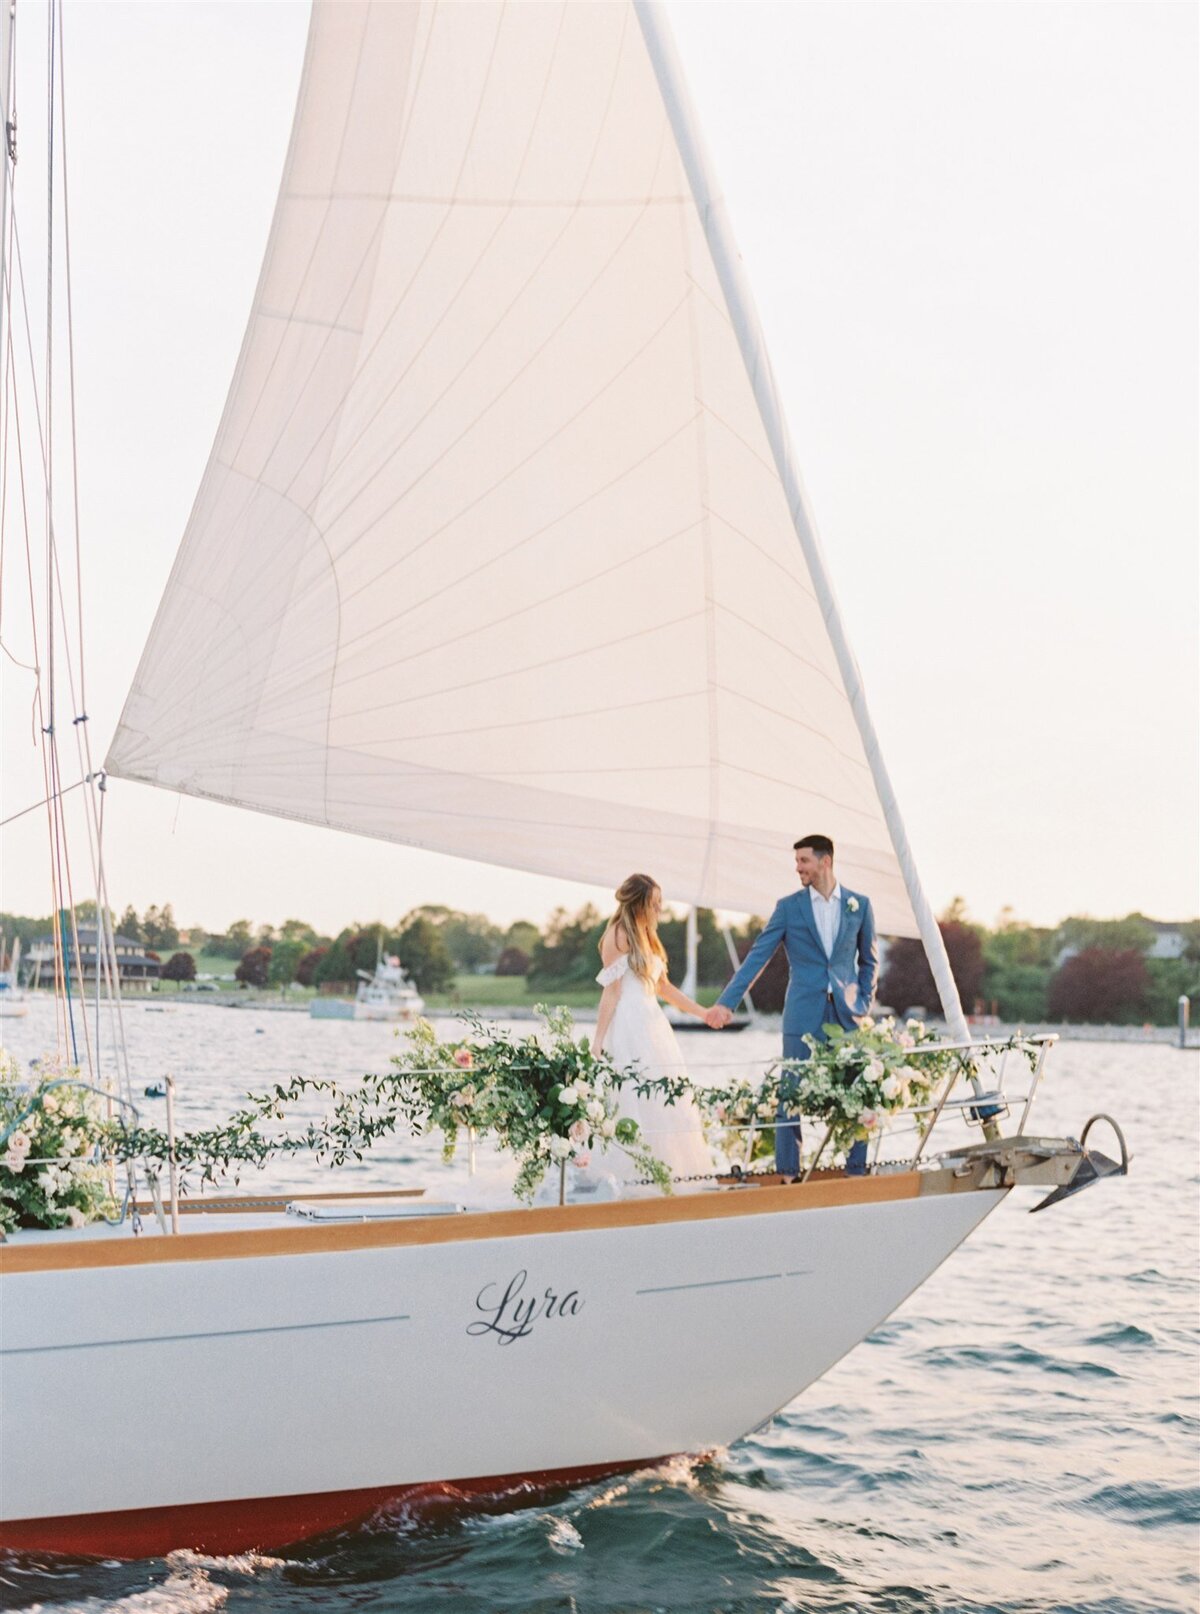 Kate-Murtaugh-Events-RI-wedding-planner-coastal-Newport-luxury-elopement-floral-installation-sailboat-yacht-sail-RI-couple-holding-hands